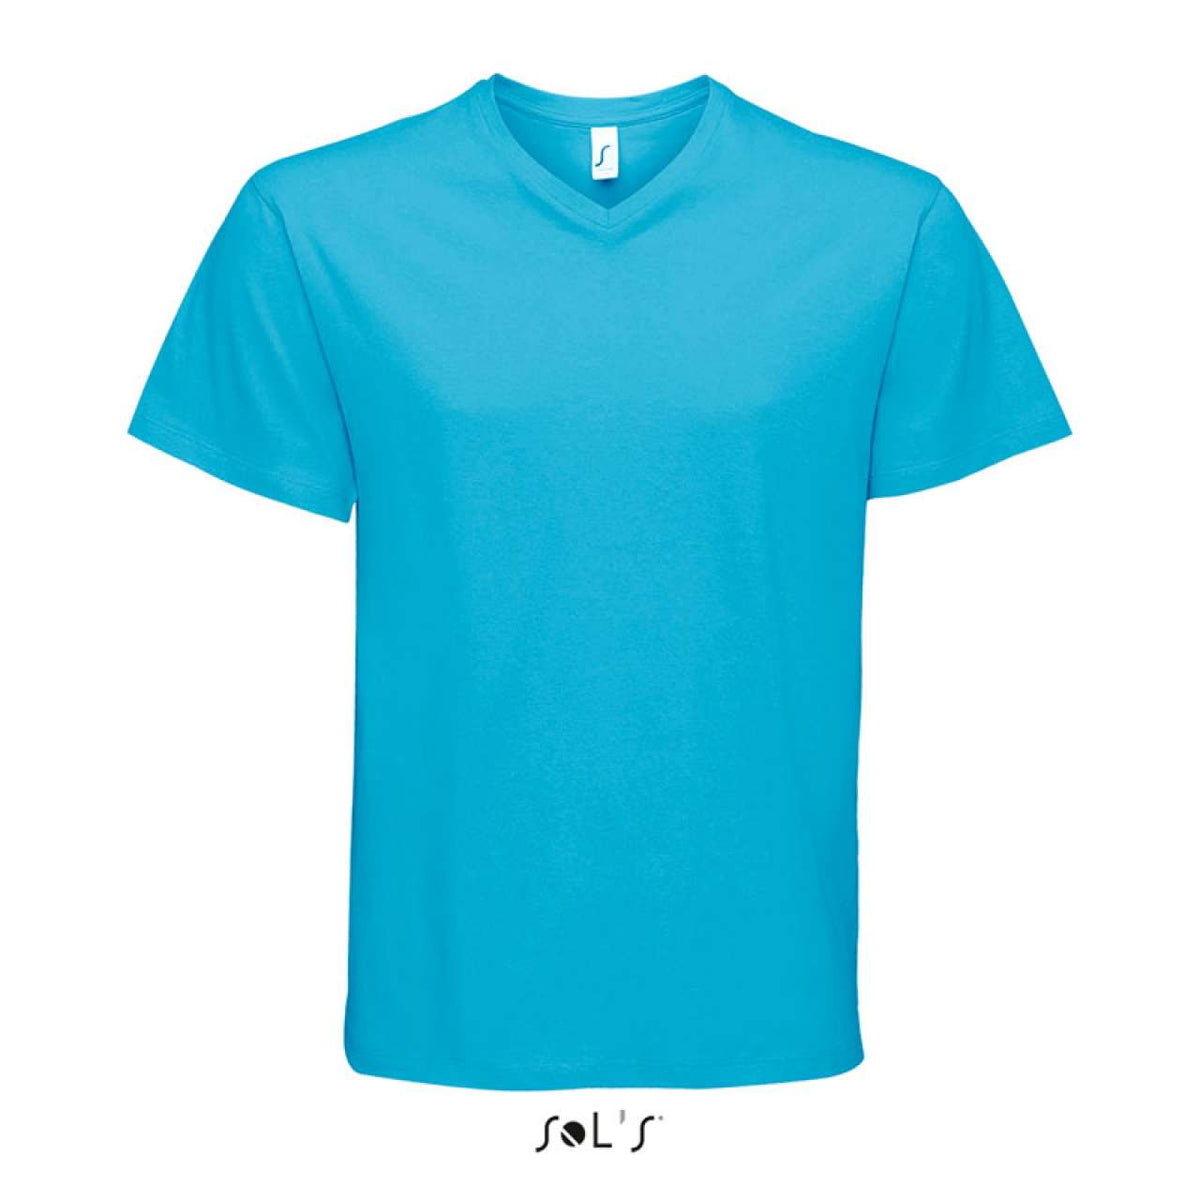 SOL'S Herren T-Shirt V-Neck Shirt V-Ausschnitt Classic Kurzarm Basic